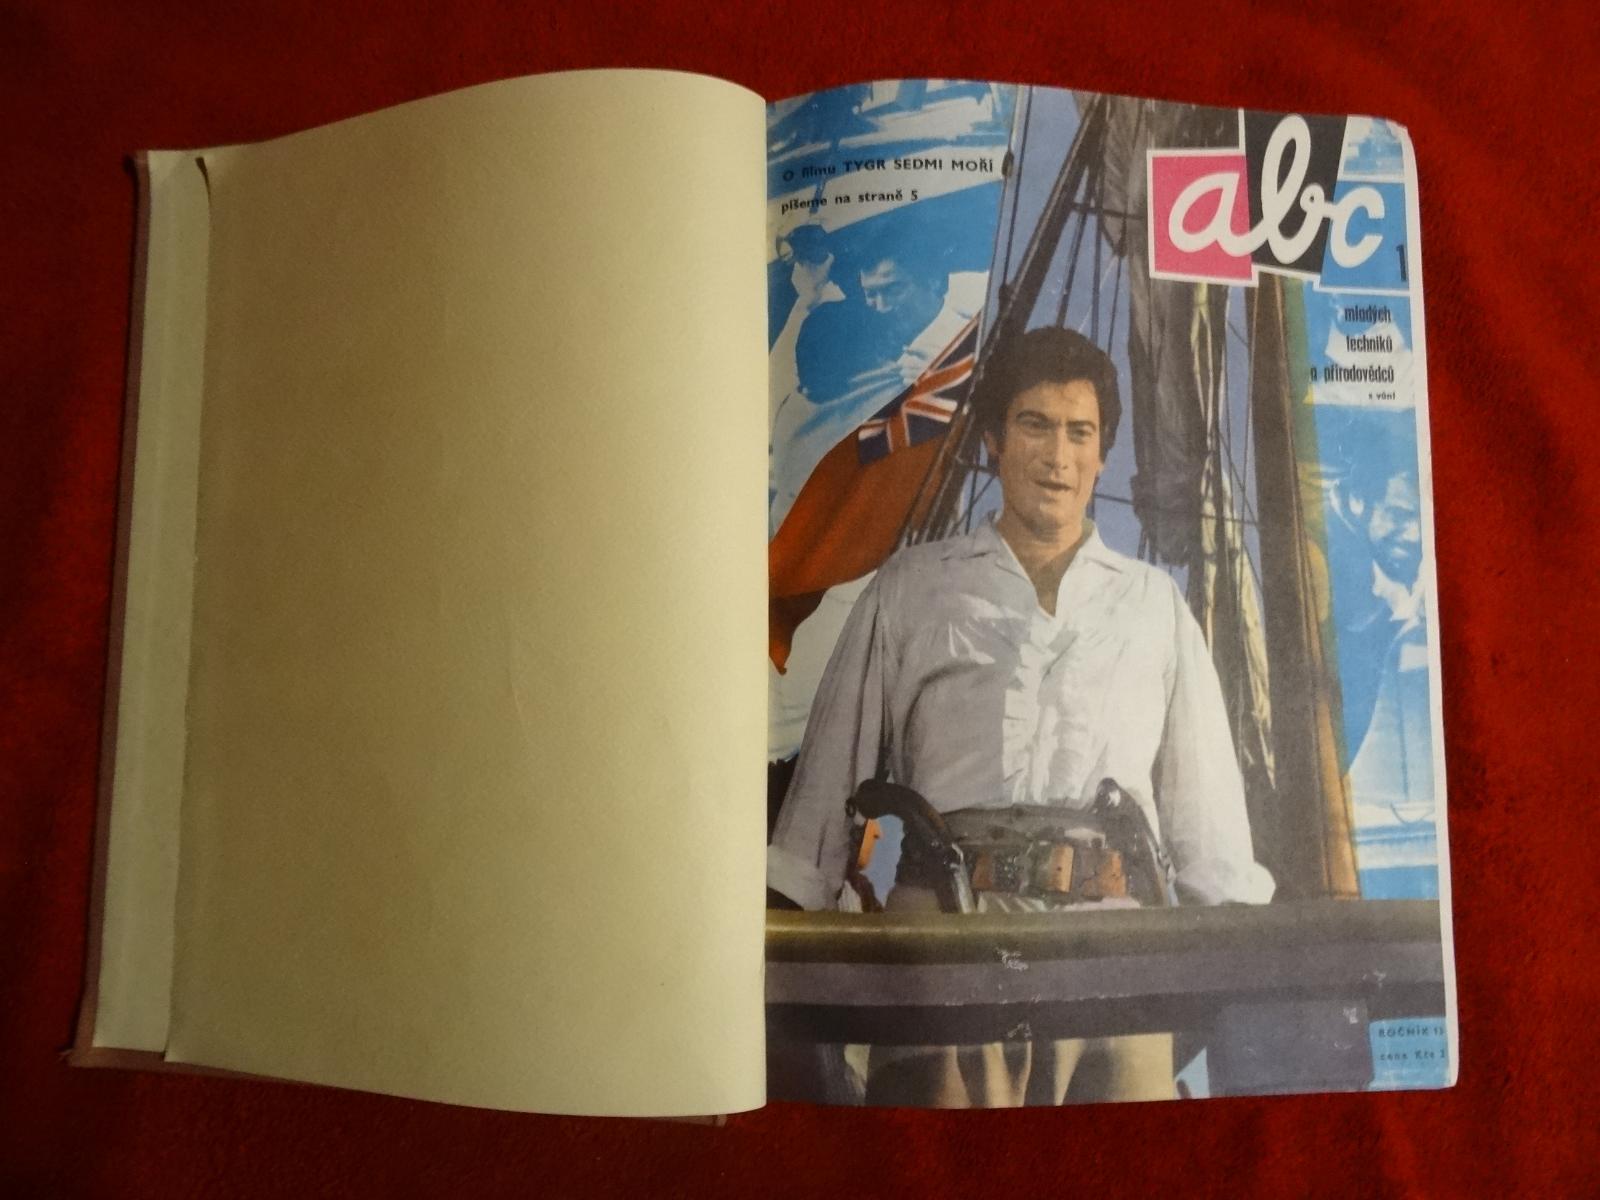 ABC ročník 13 (1968-69) - kniha s déčky, atlasy a vystřihovánkami - Knihy a časopisy